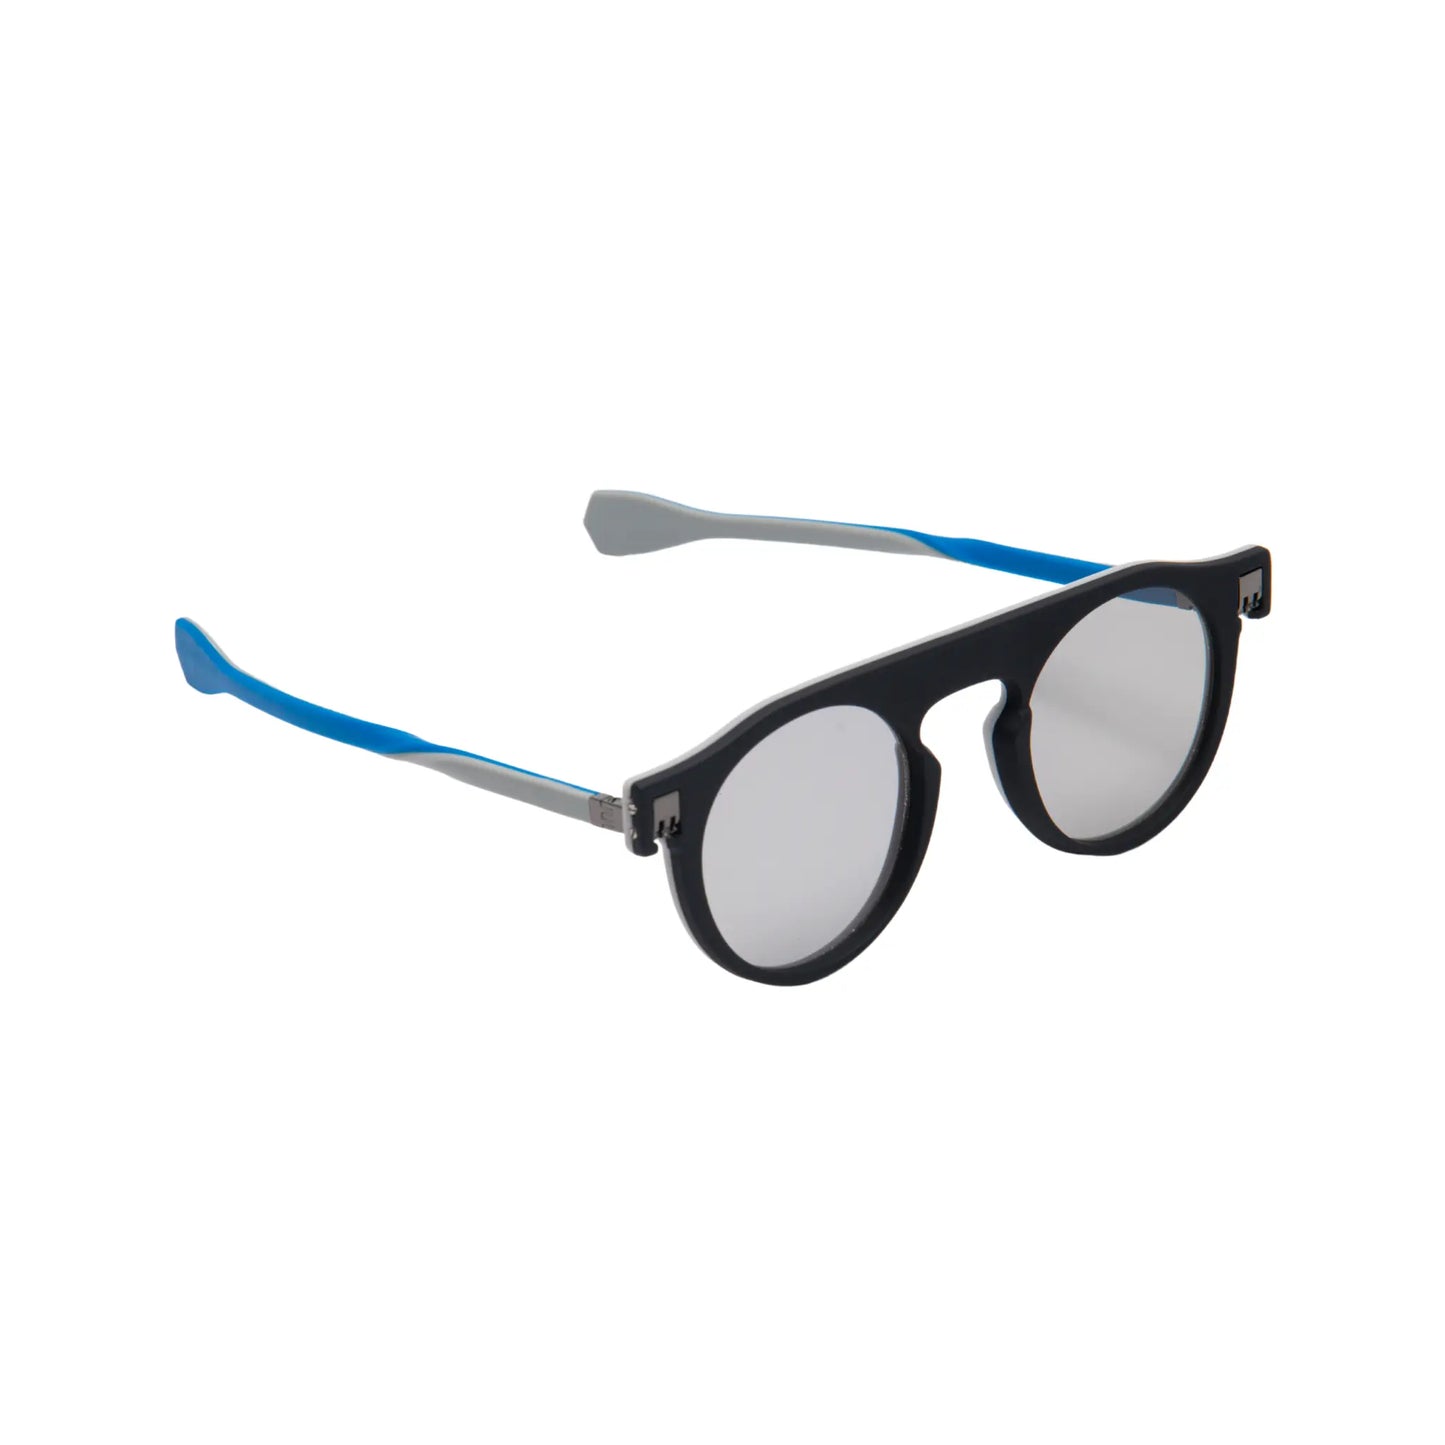 Reverso sunglasses black/grey & blue reversible & ultra light side view